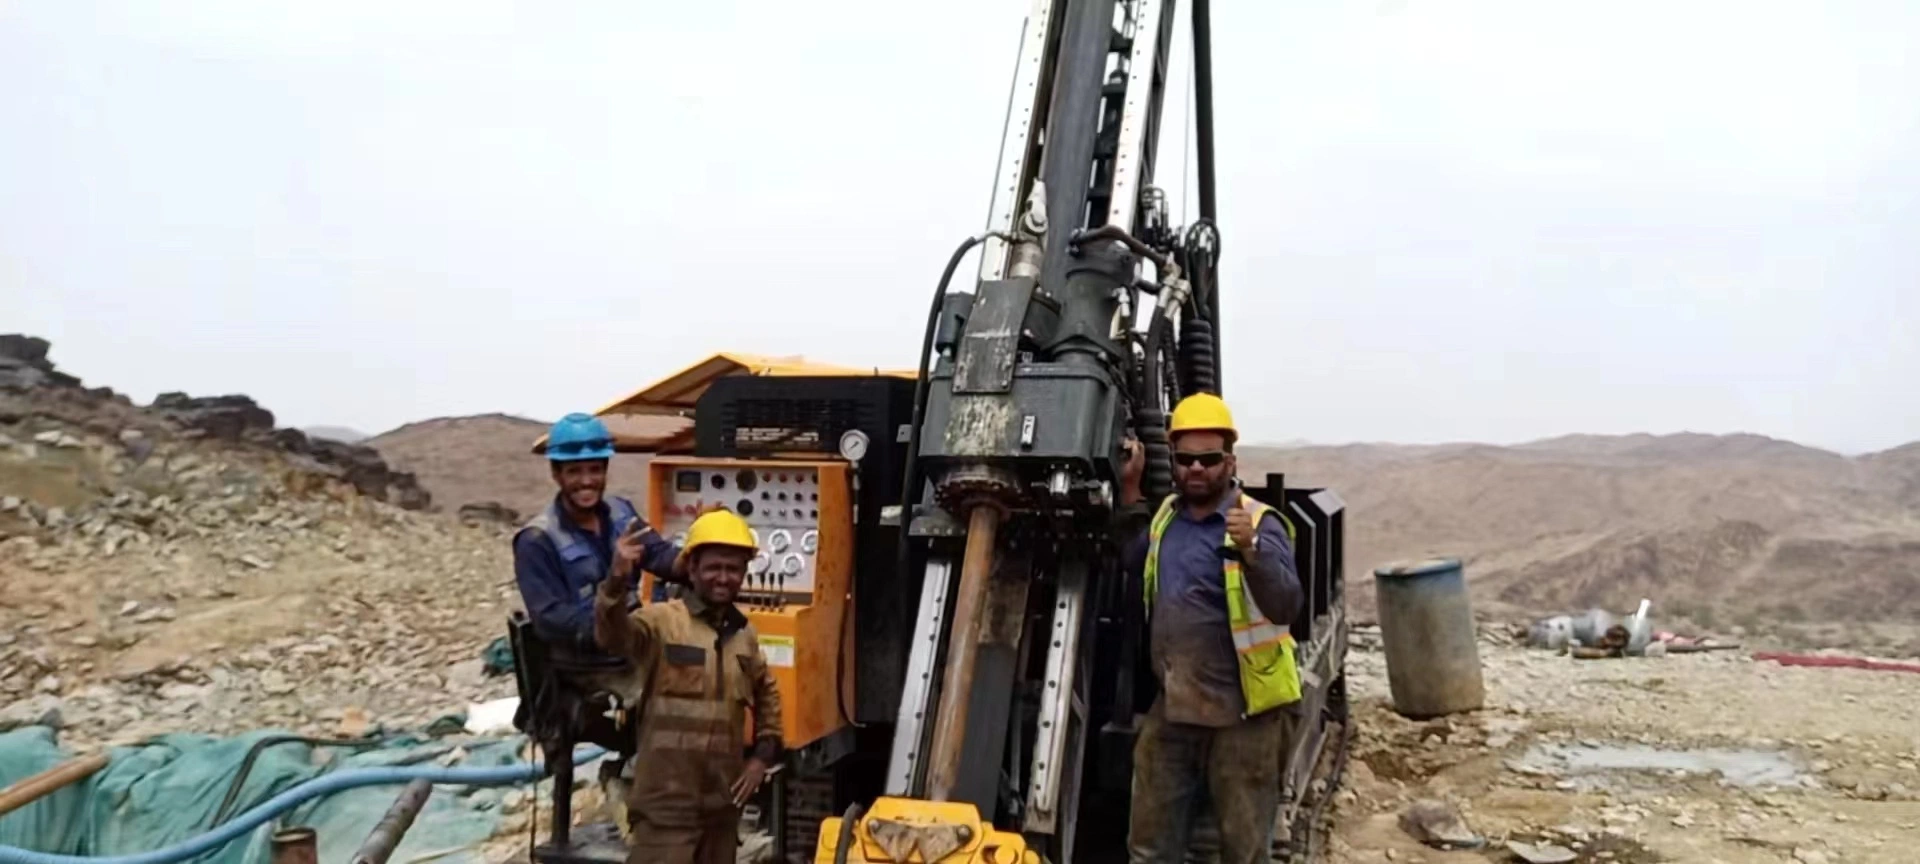 Full Hydraulic Rotary Head Diamond Wireline Mining Exploration Coring Drill Machine/Geotechnical Investigation Core Sampler Drilling Rig